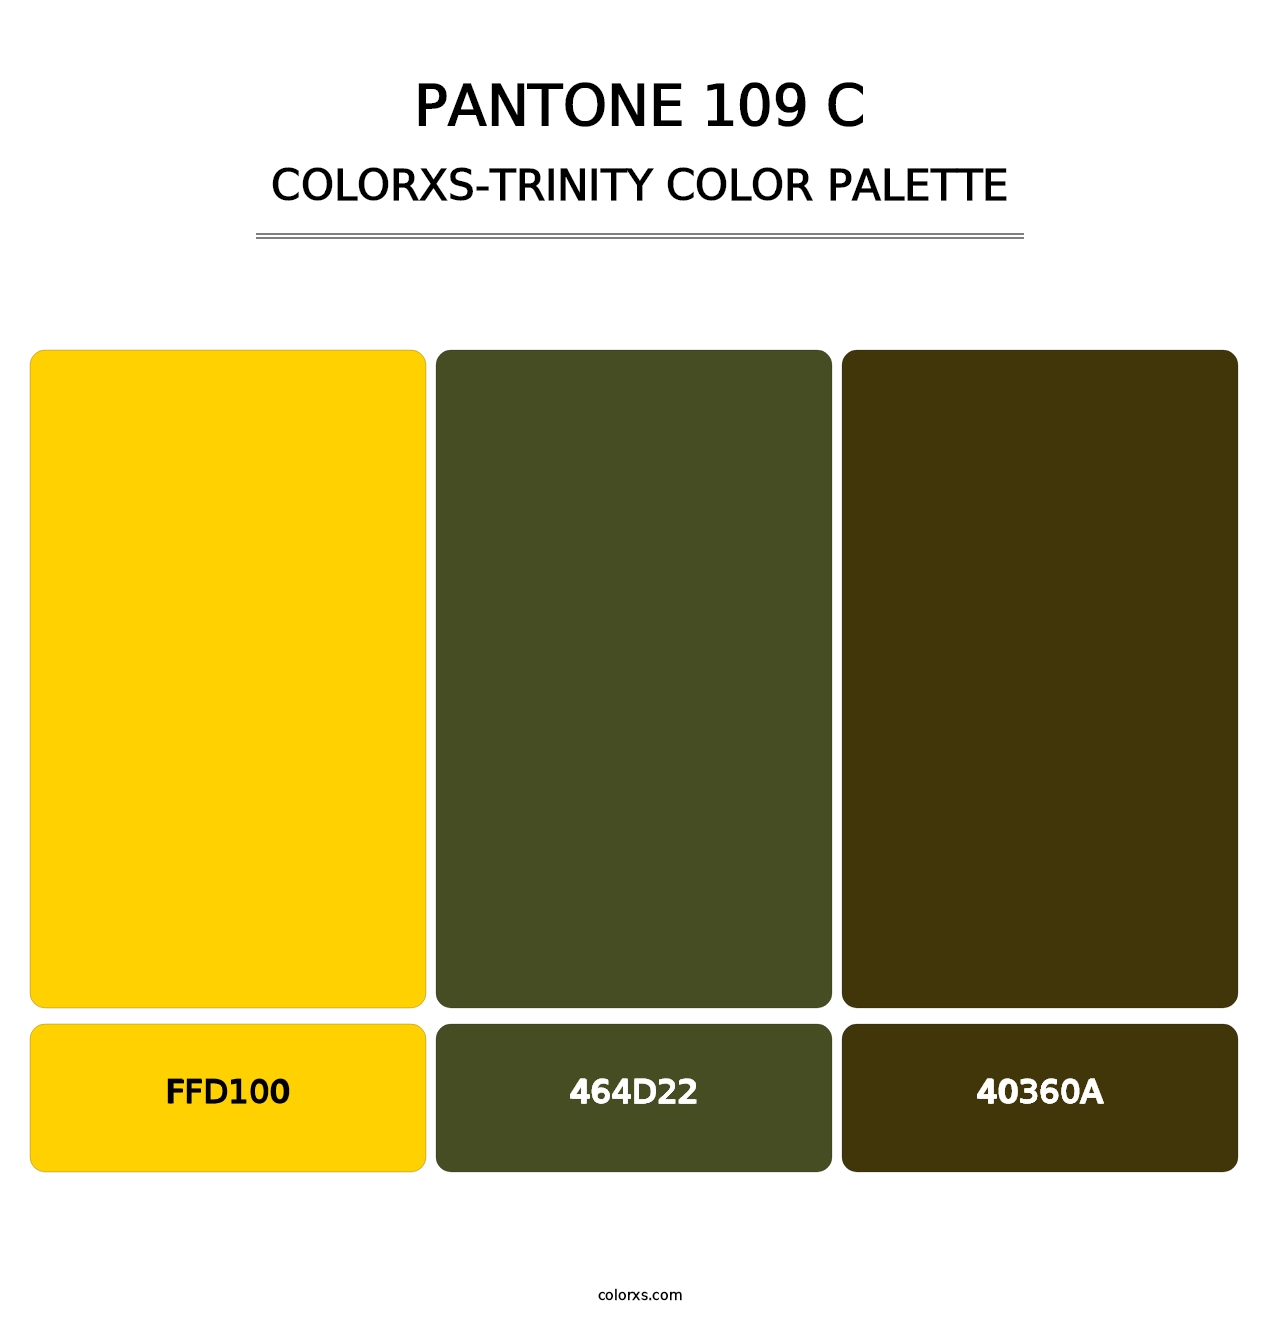 PANTONE 109 C - Colorxs Trinity Palette